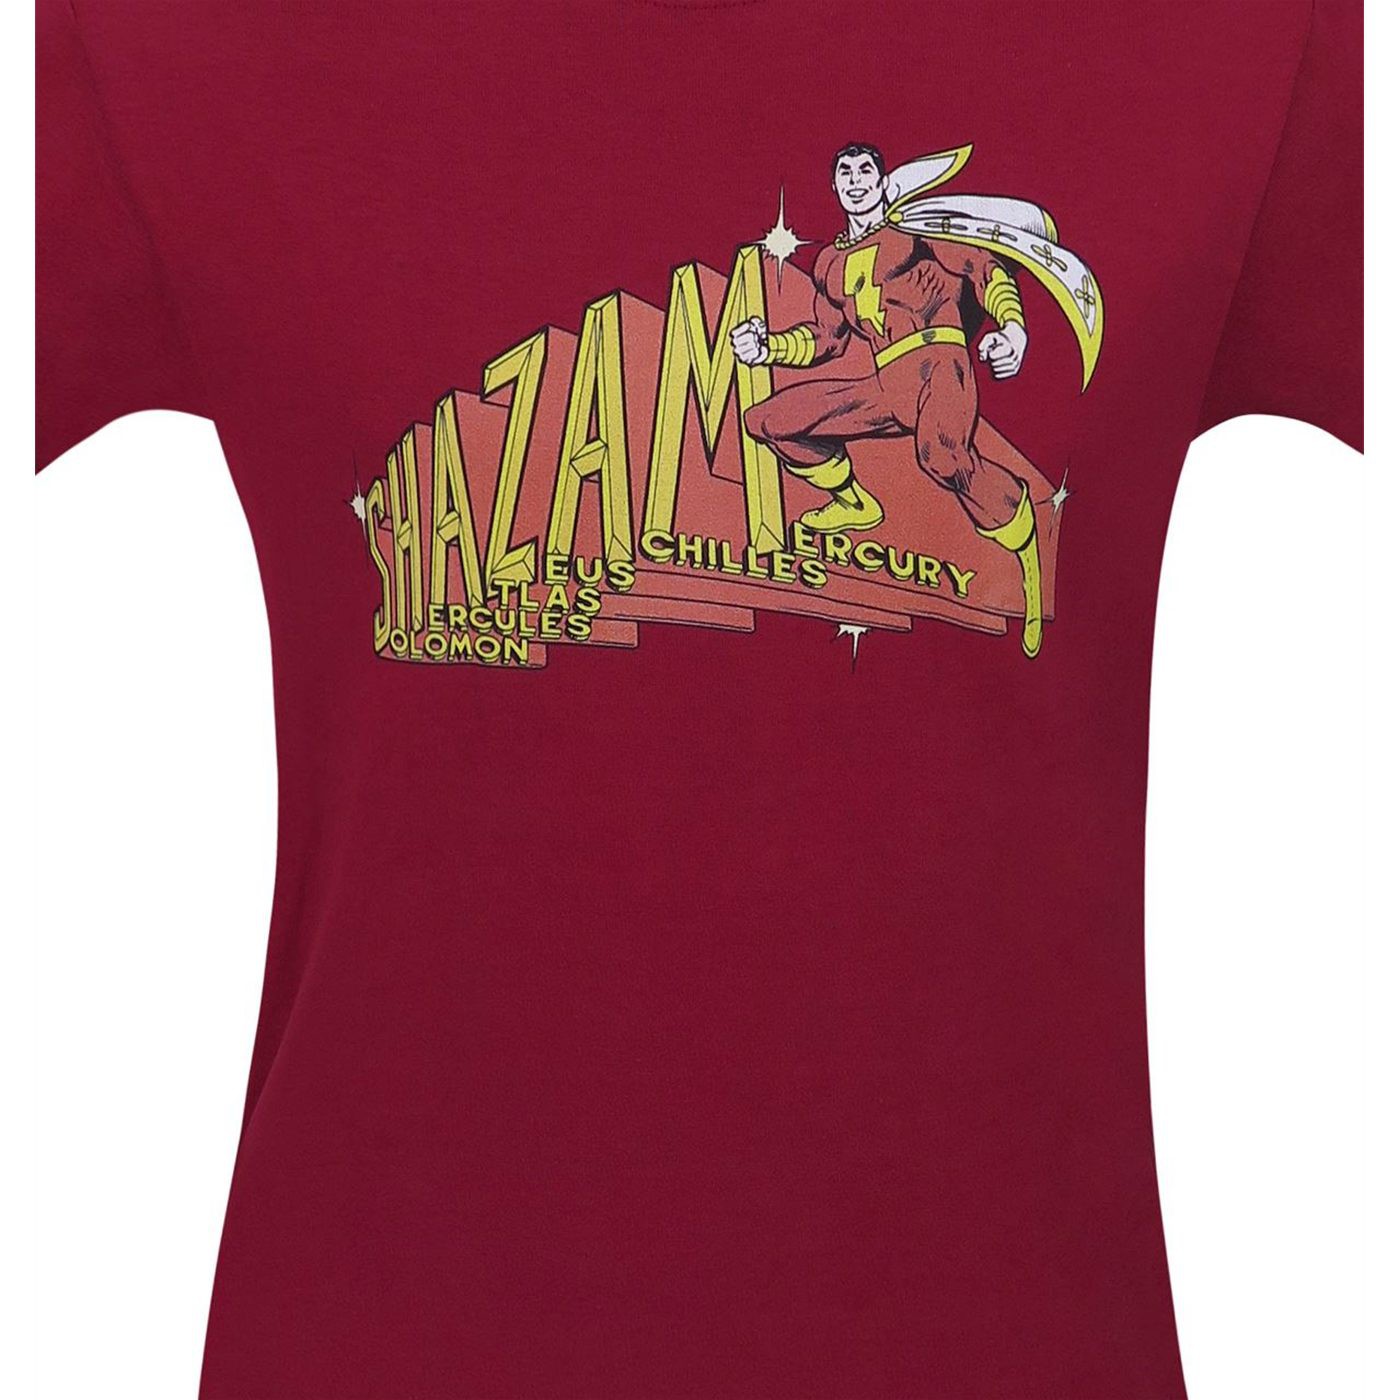 Shazam Greek Gods Men's T-Shirt